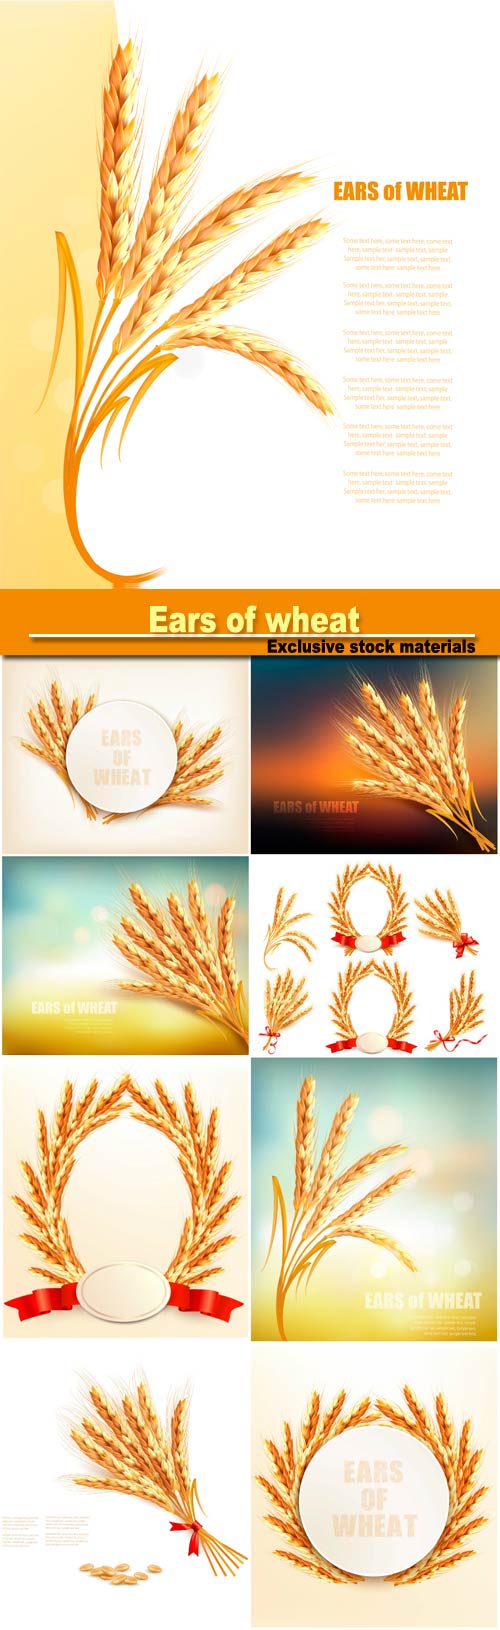 Ears of wheat, vector illustration